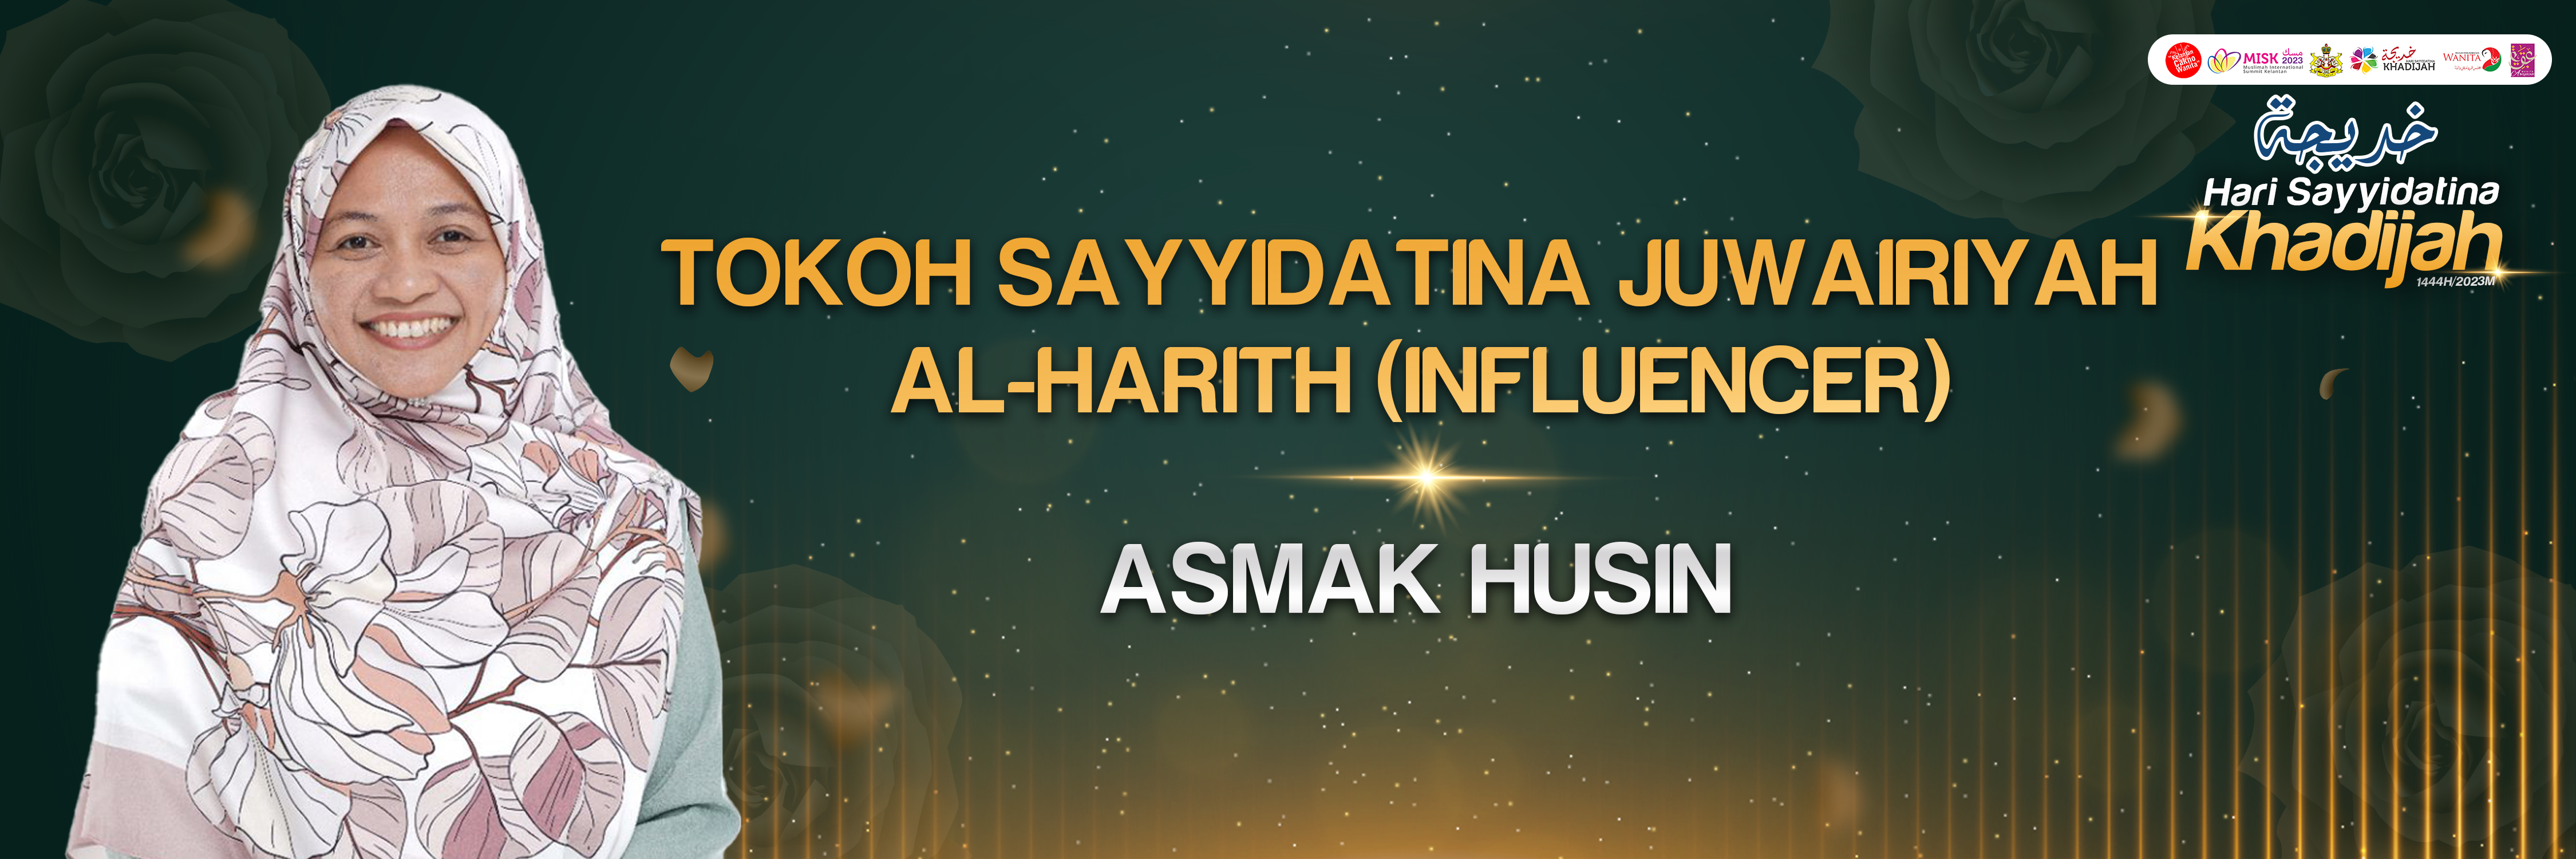 TOKOH SAYYIDATINA JUWAIRIYAH AL-HARITH (INFLUENCER)